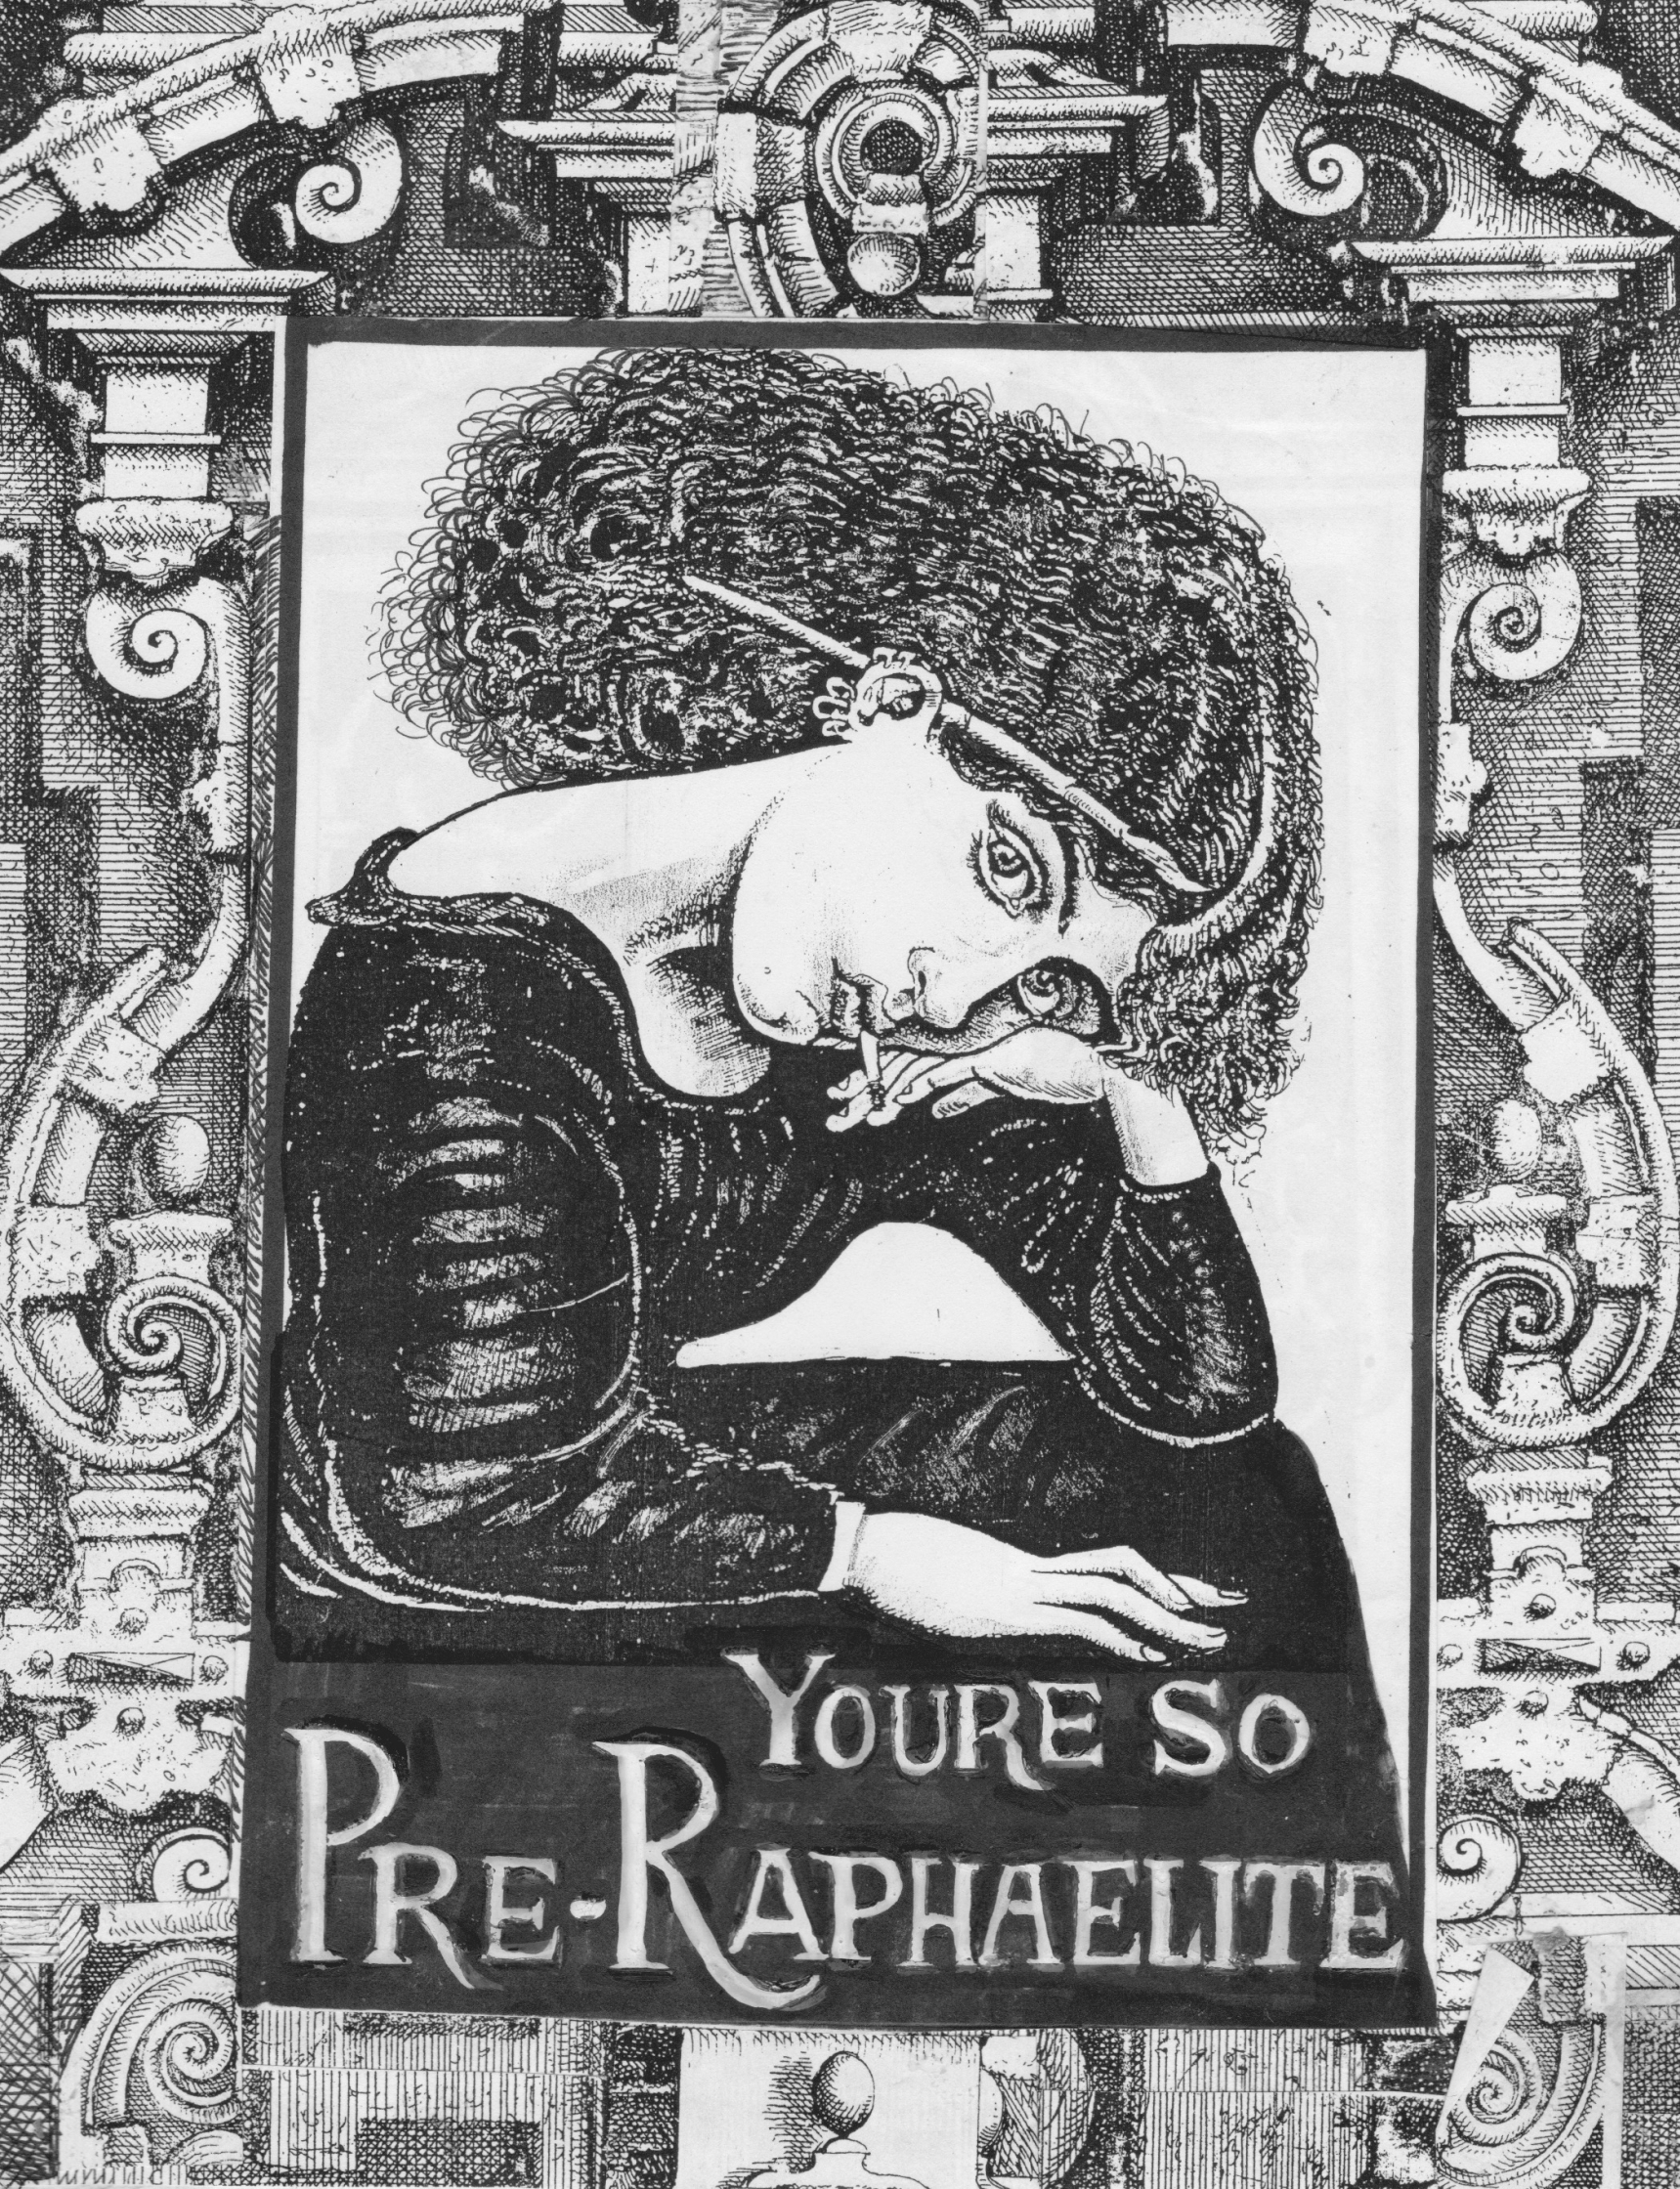 You're So Pre-Raphaelite-Chris Price.jpg